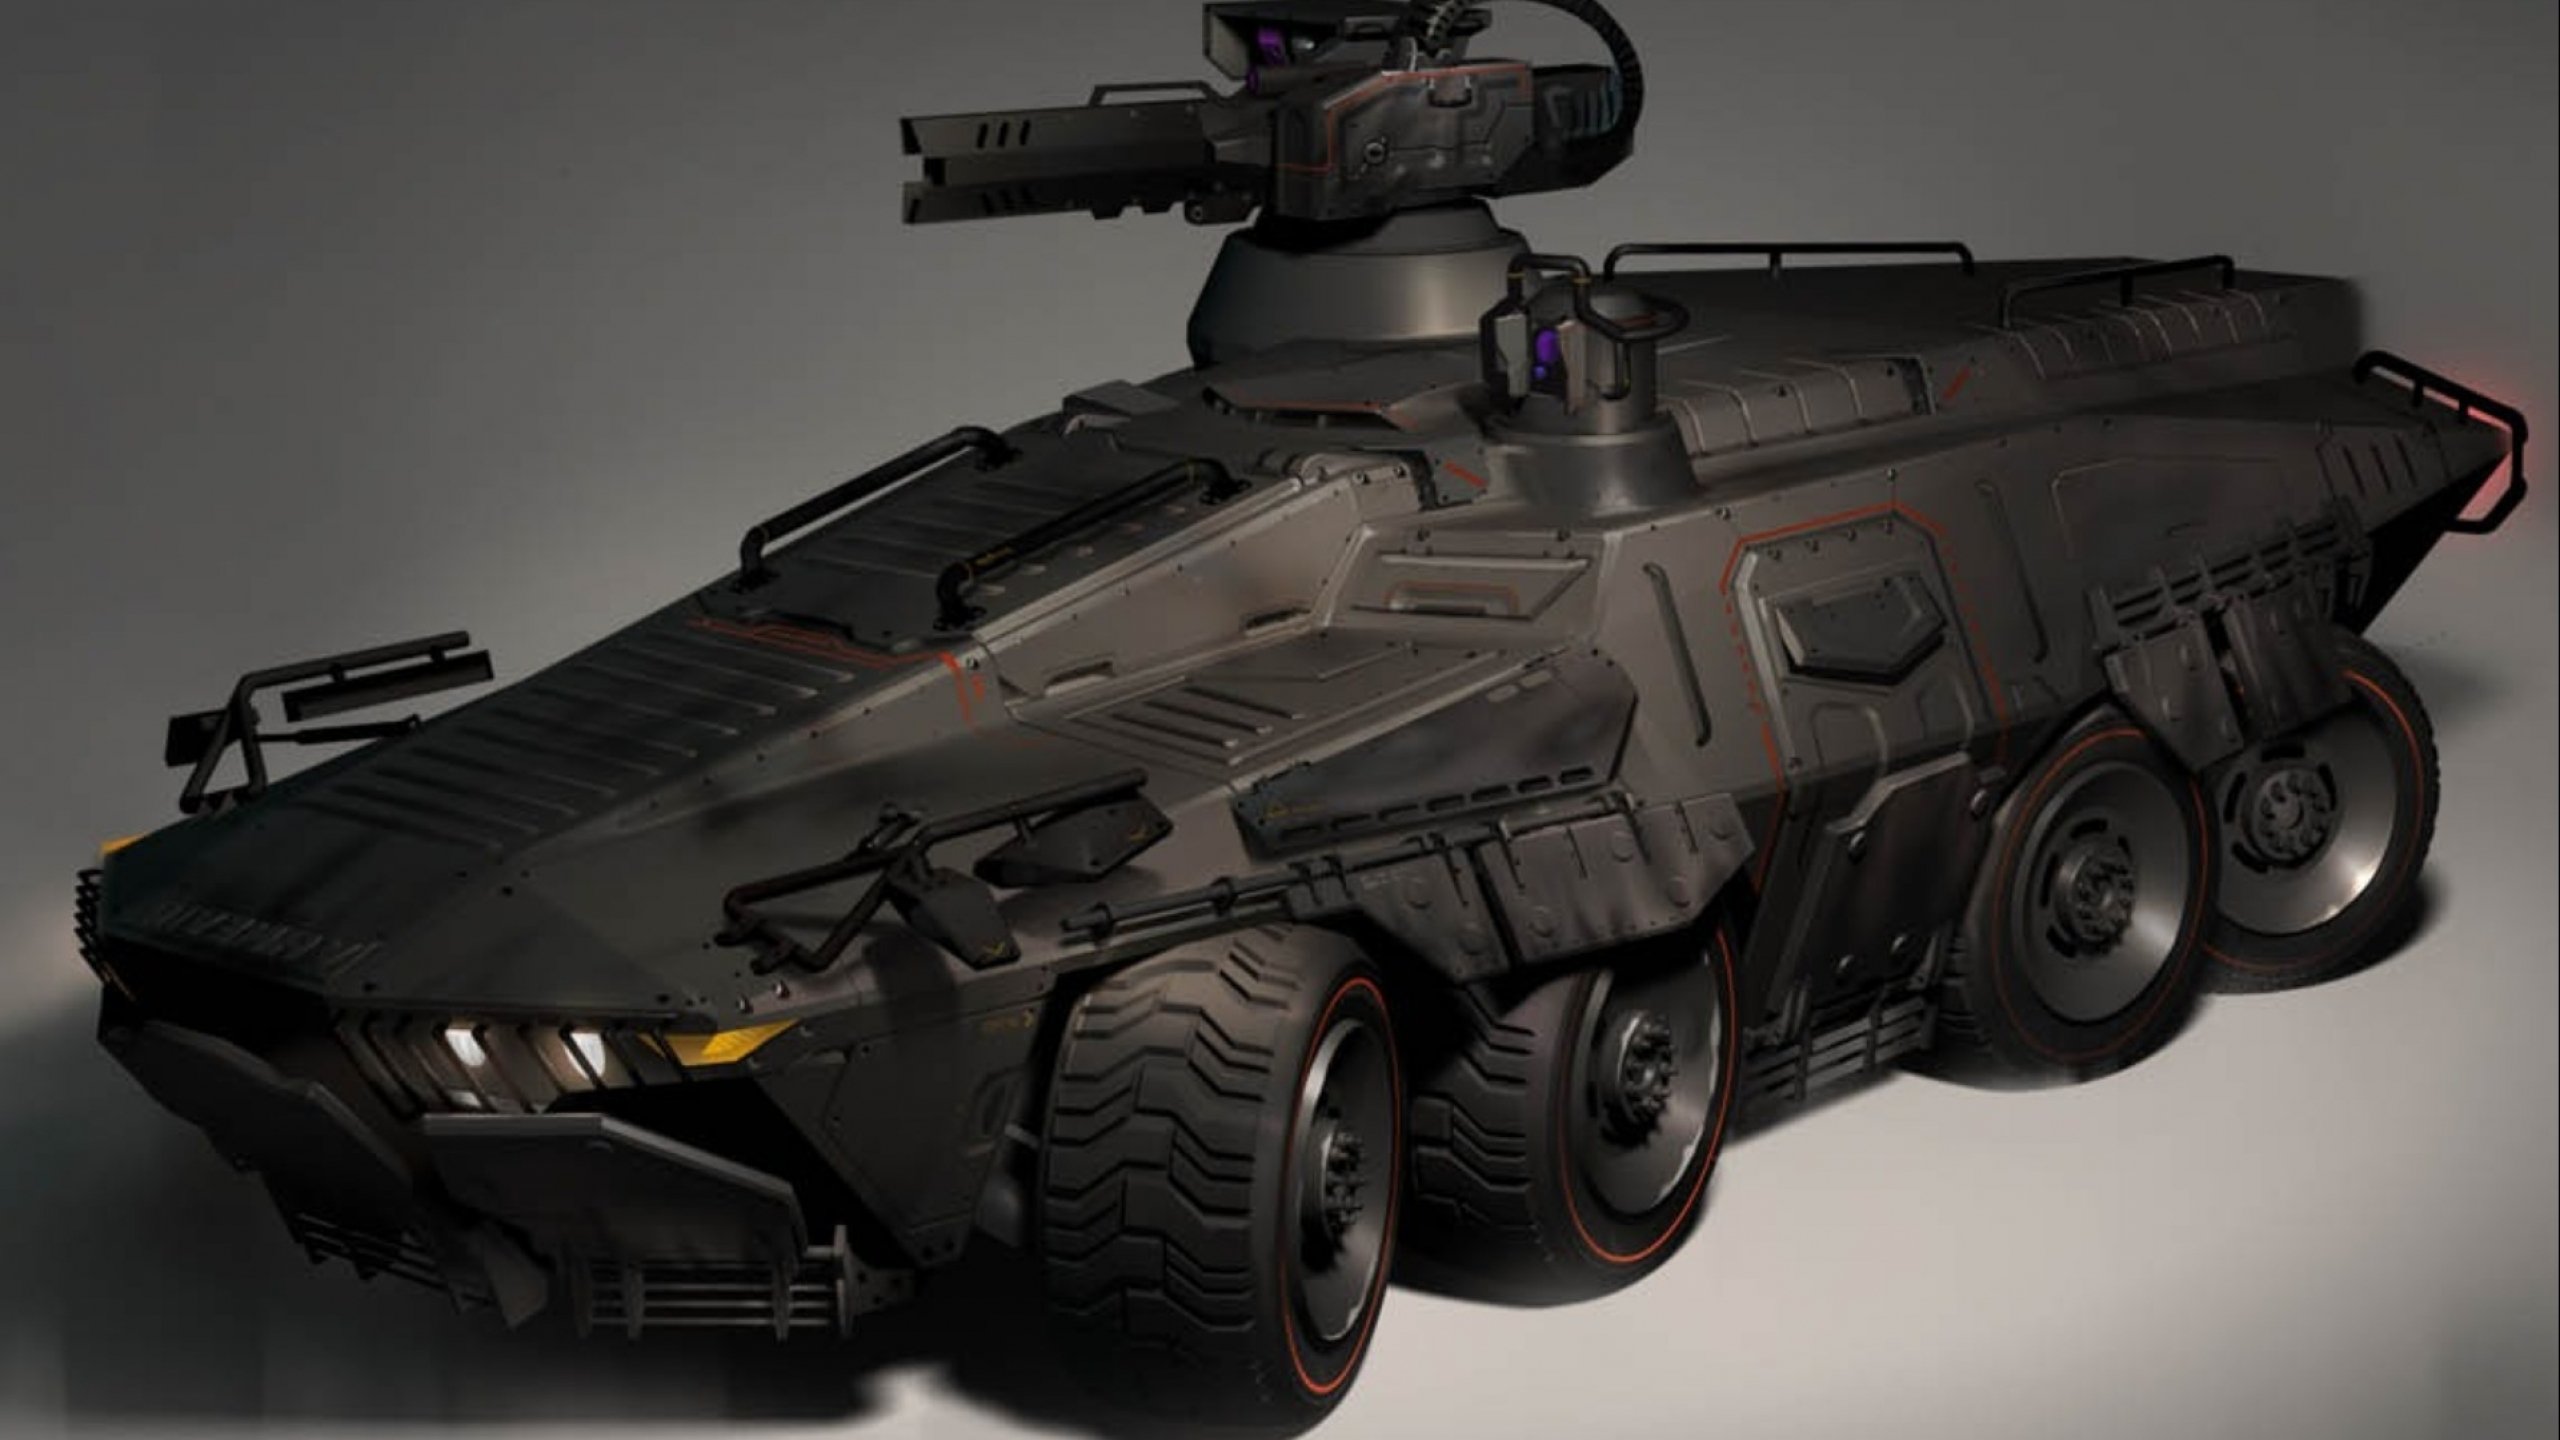 futuristic military tank concept art